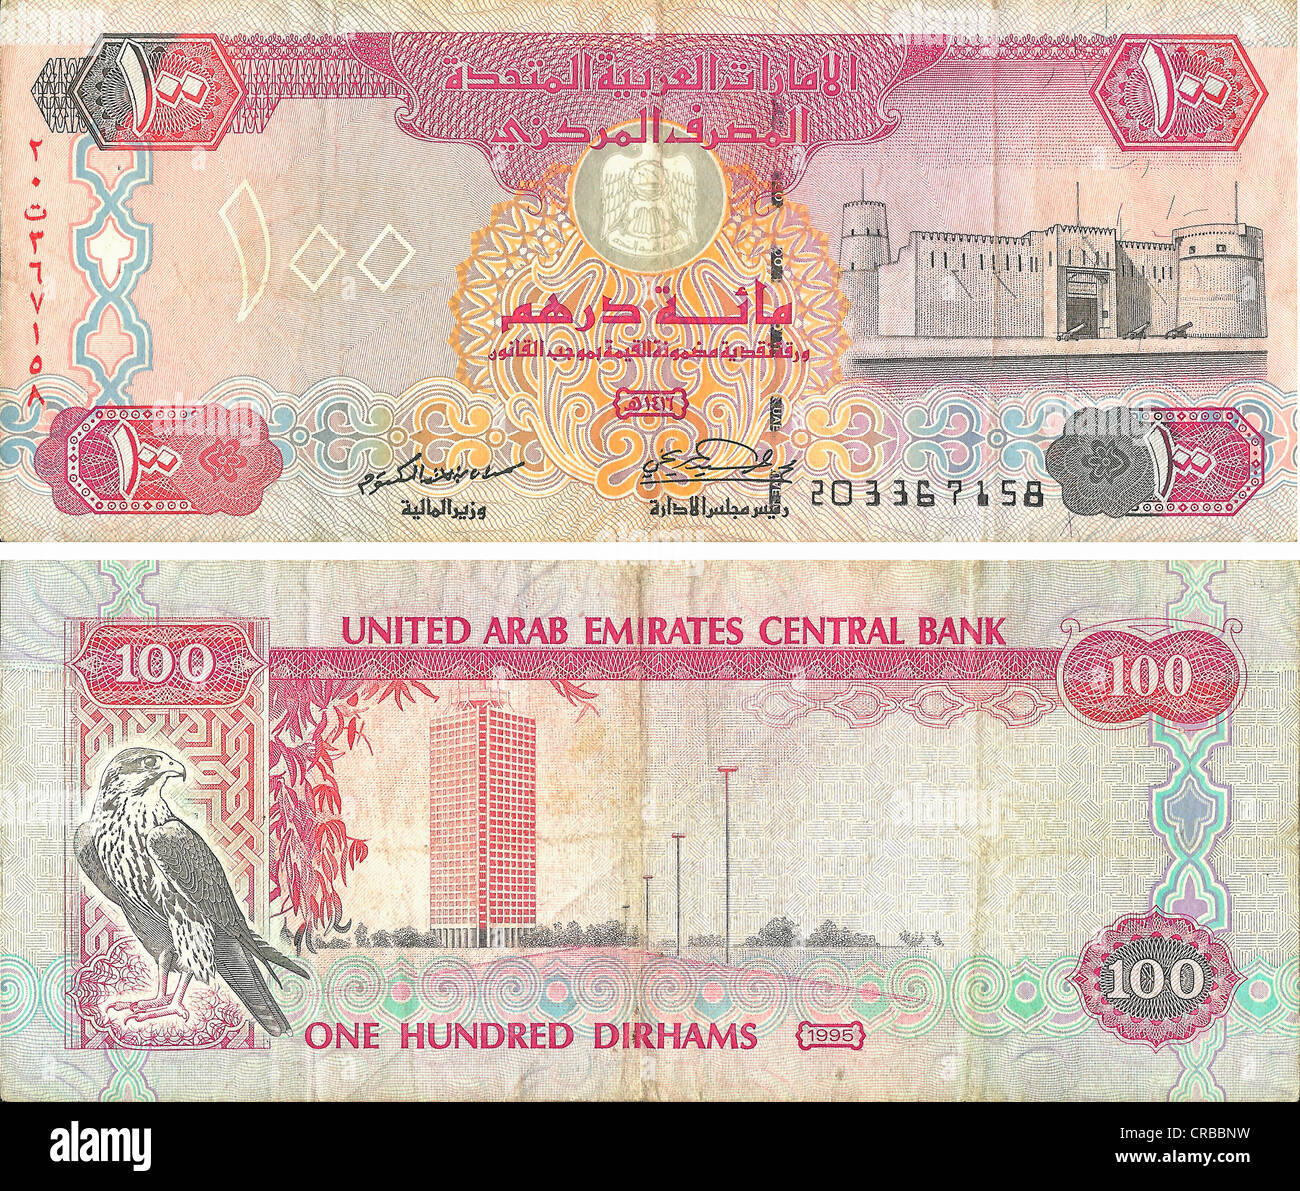 14000 дирхам в рубли. United arab Emirates Central Bank 100flow фото. United arab Emirates Central Bank 100flow фото цена в рублях. Dirhams перевод.